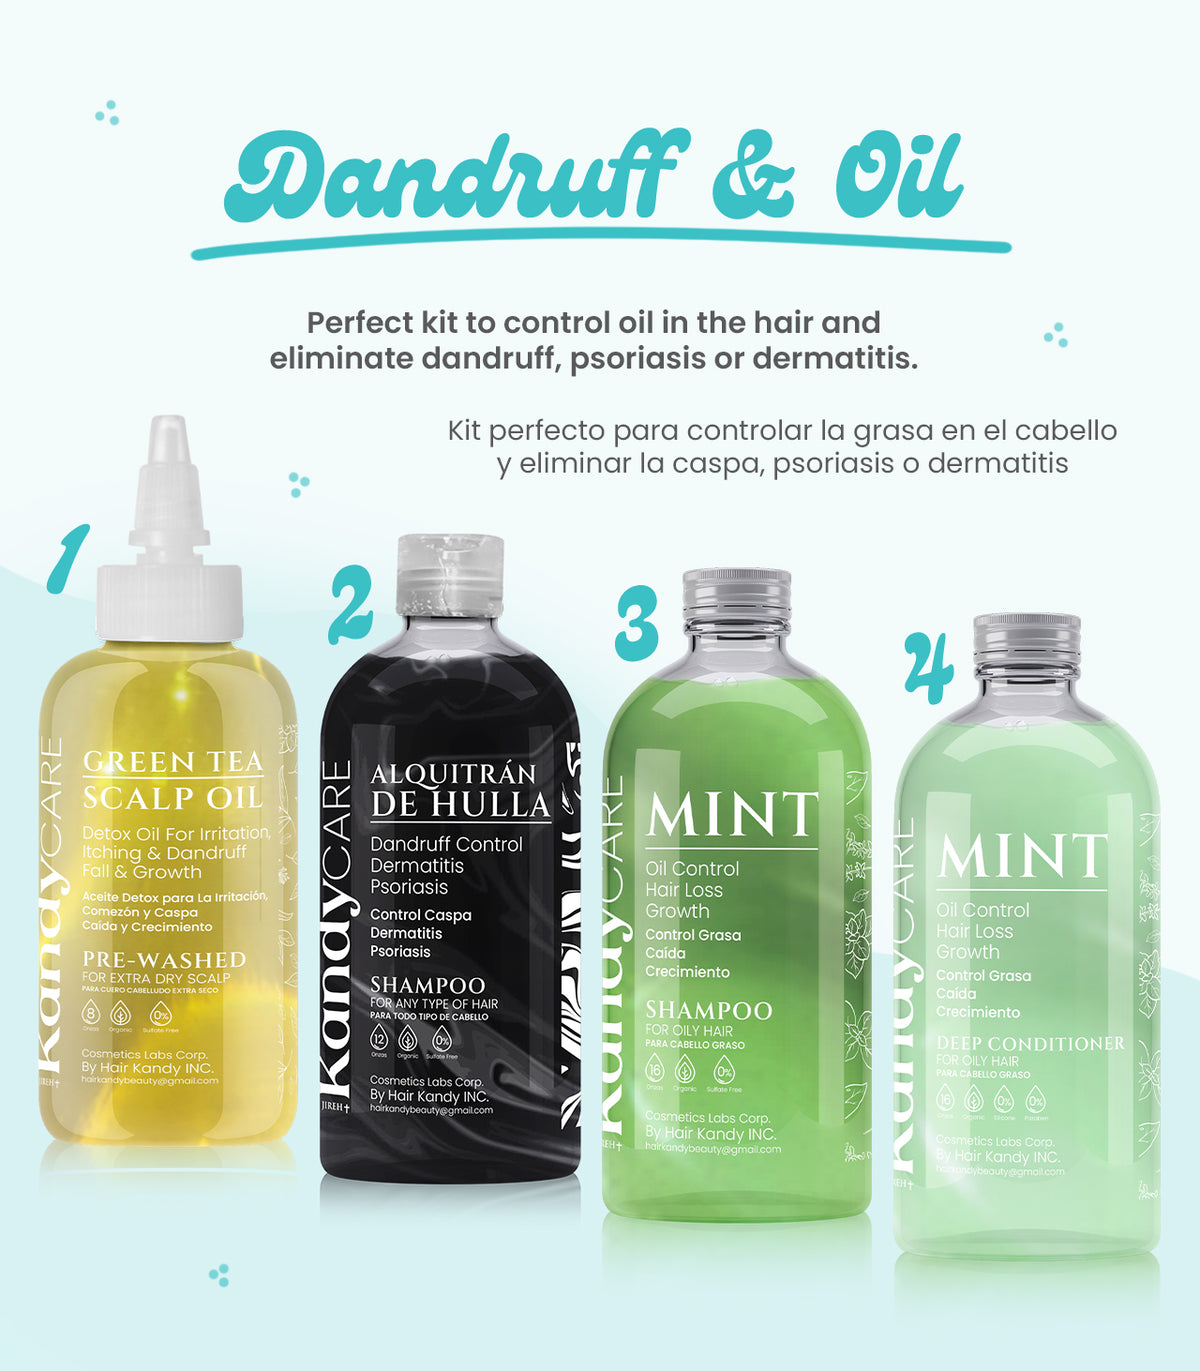 Dandruff & Oil control Kit With Scalp Oil